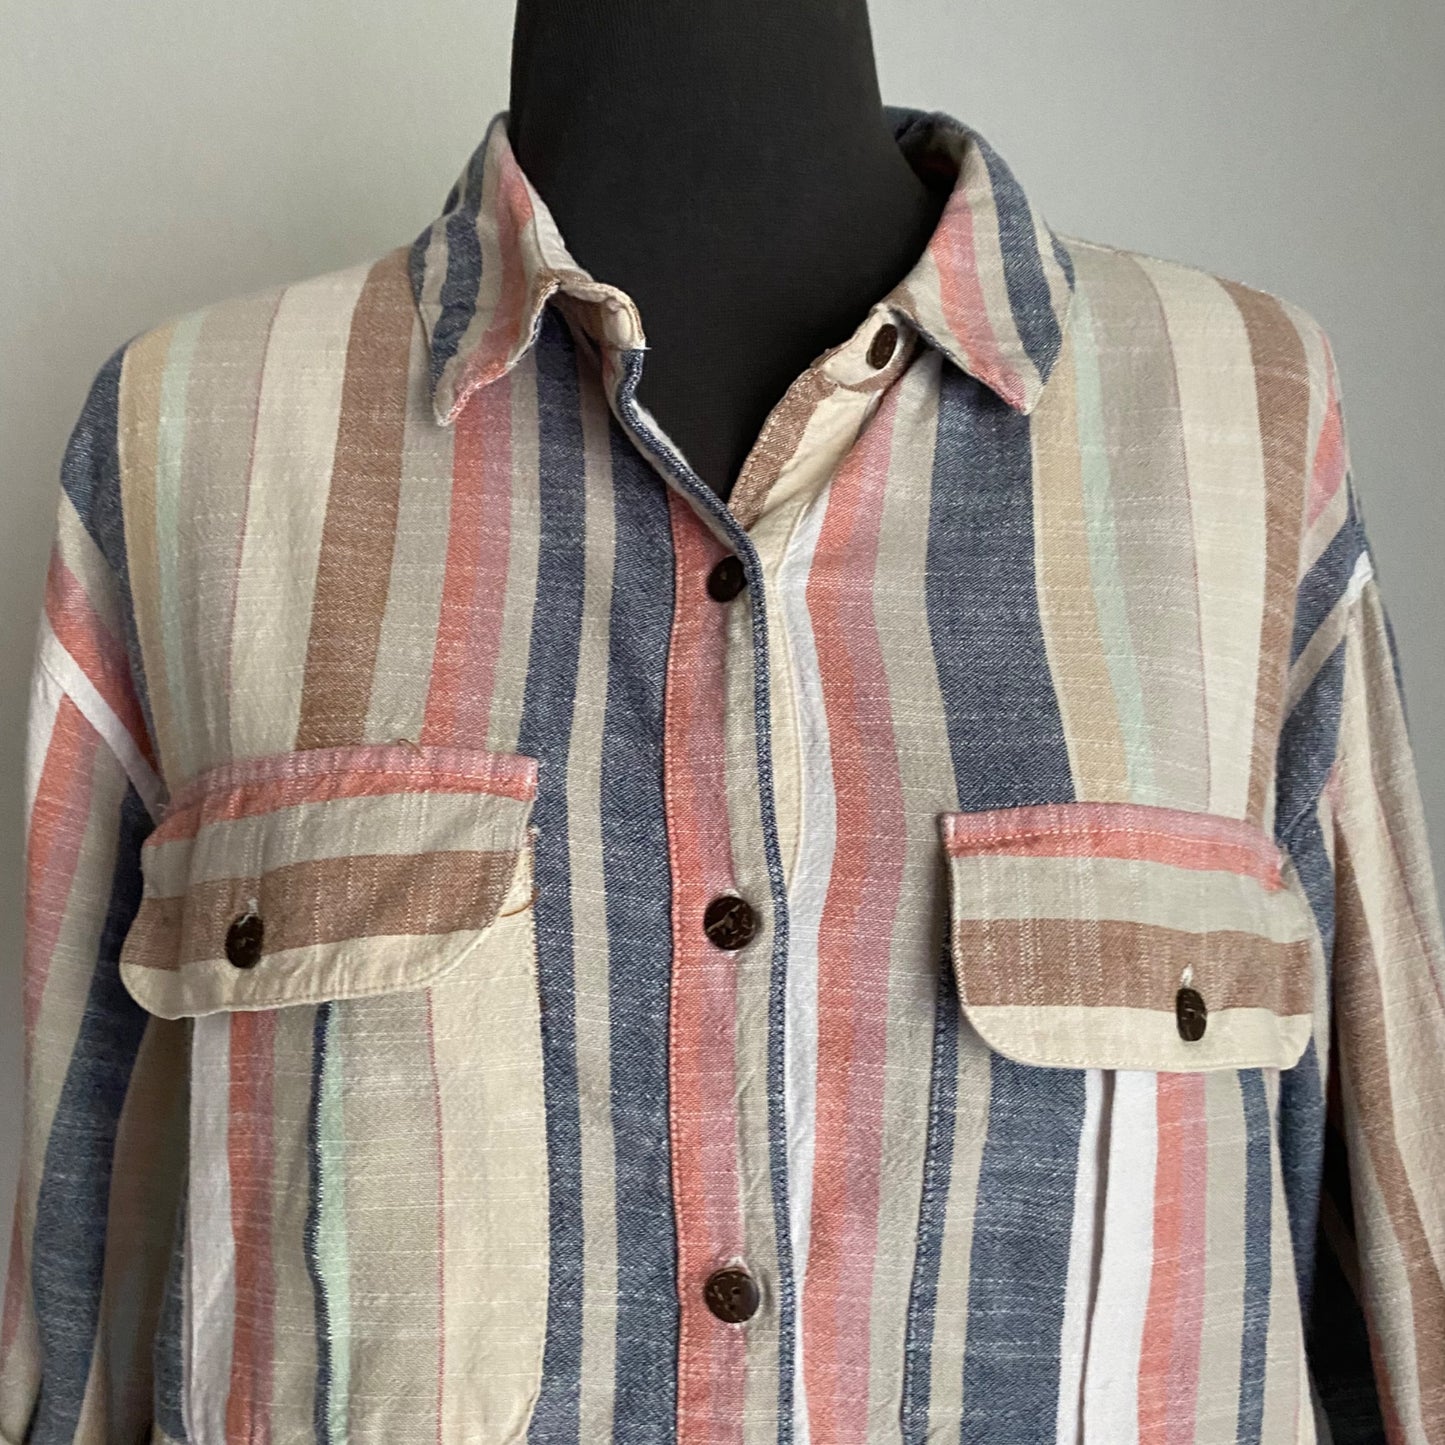 Urban Outfitter sz M 100% cotton Long sleeve 80s inspired button pockets stripe shirt